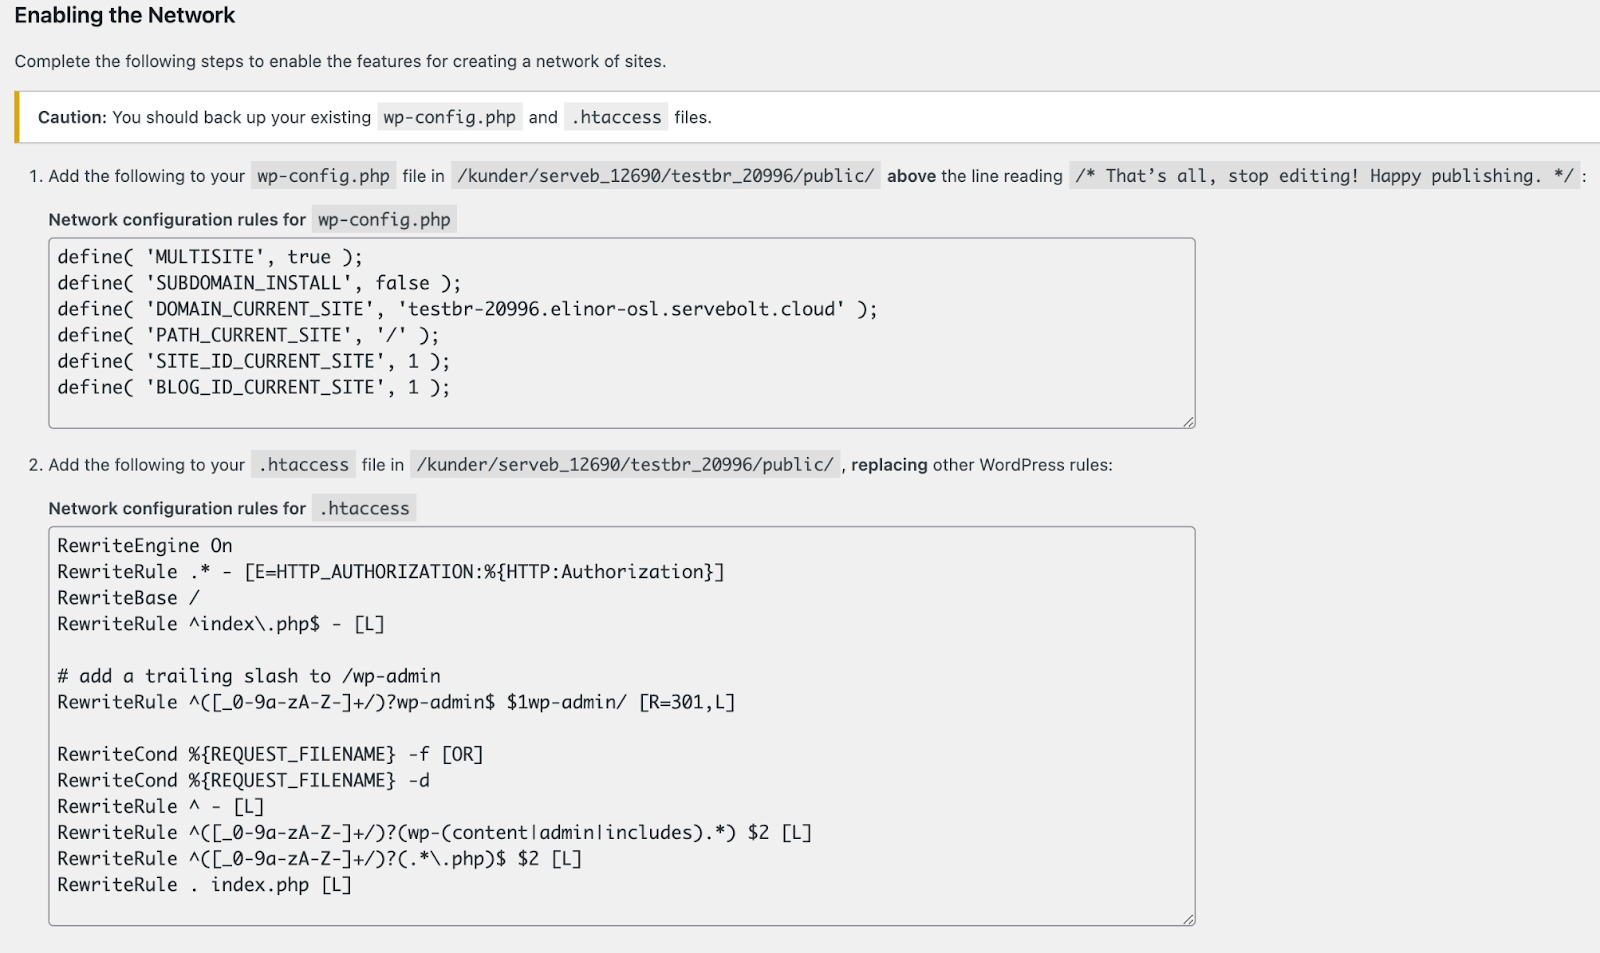 Screenshot of code snippet for enabling WordPress Multisite